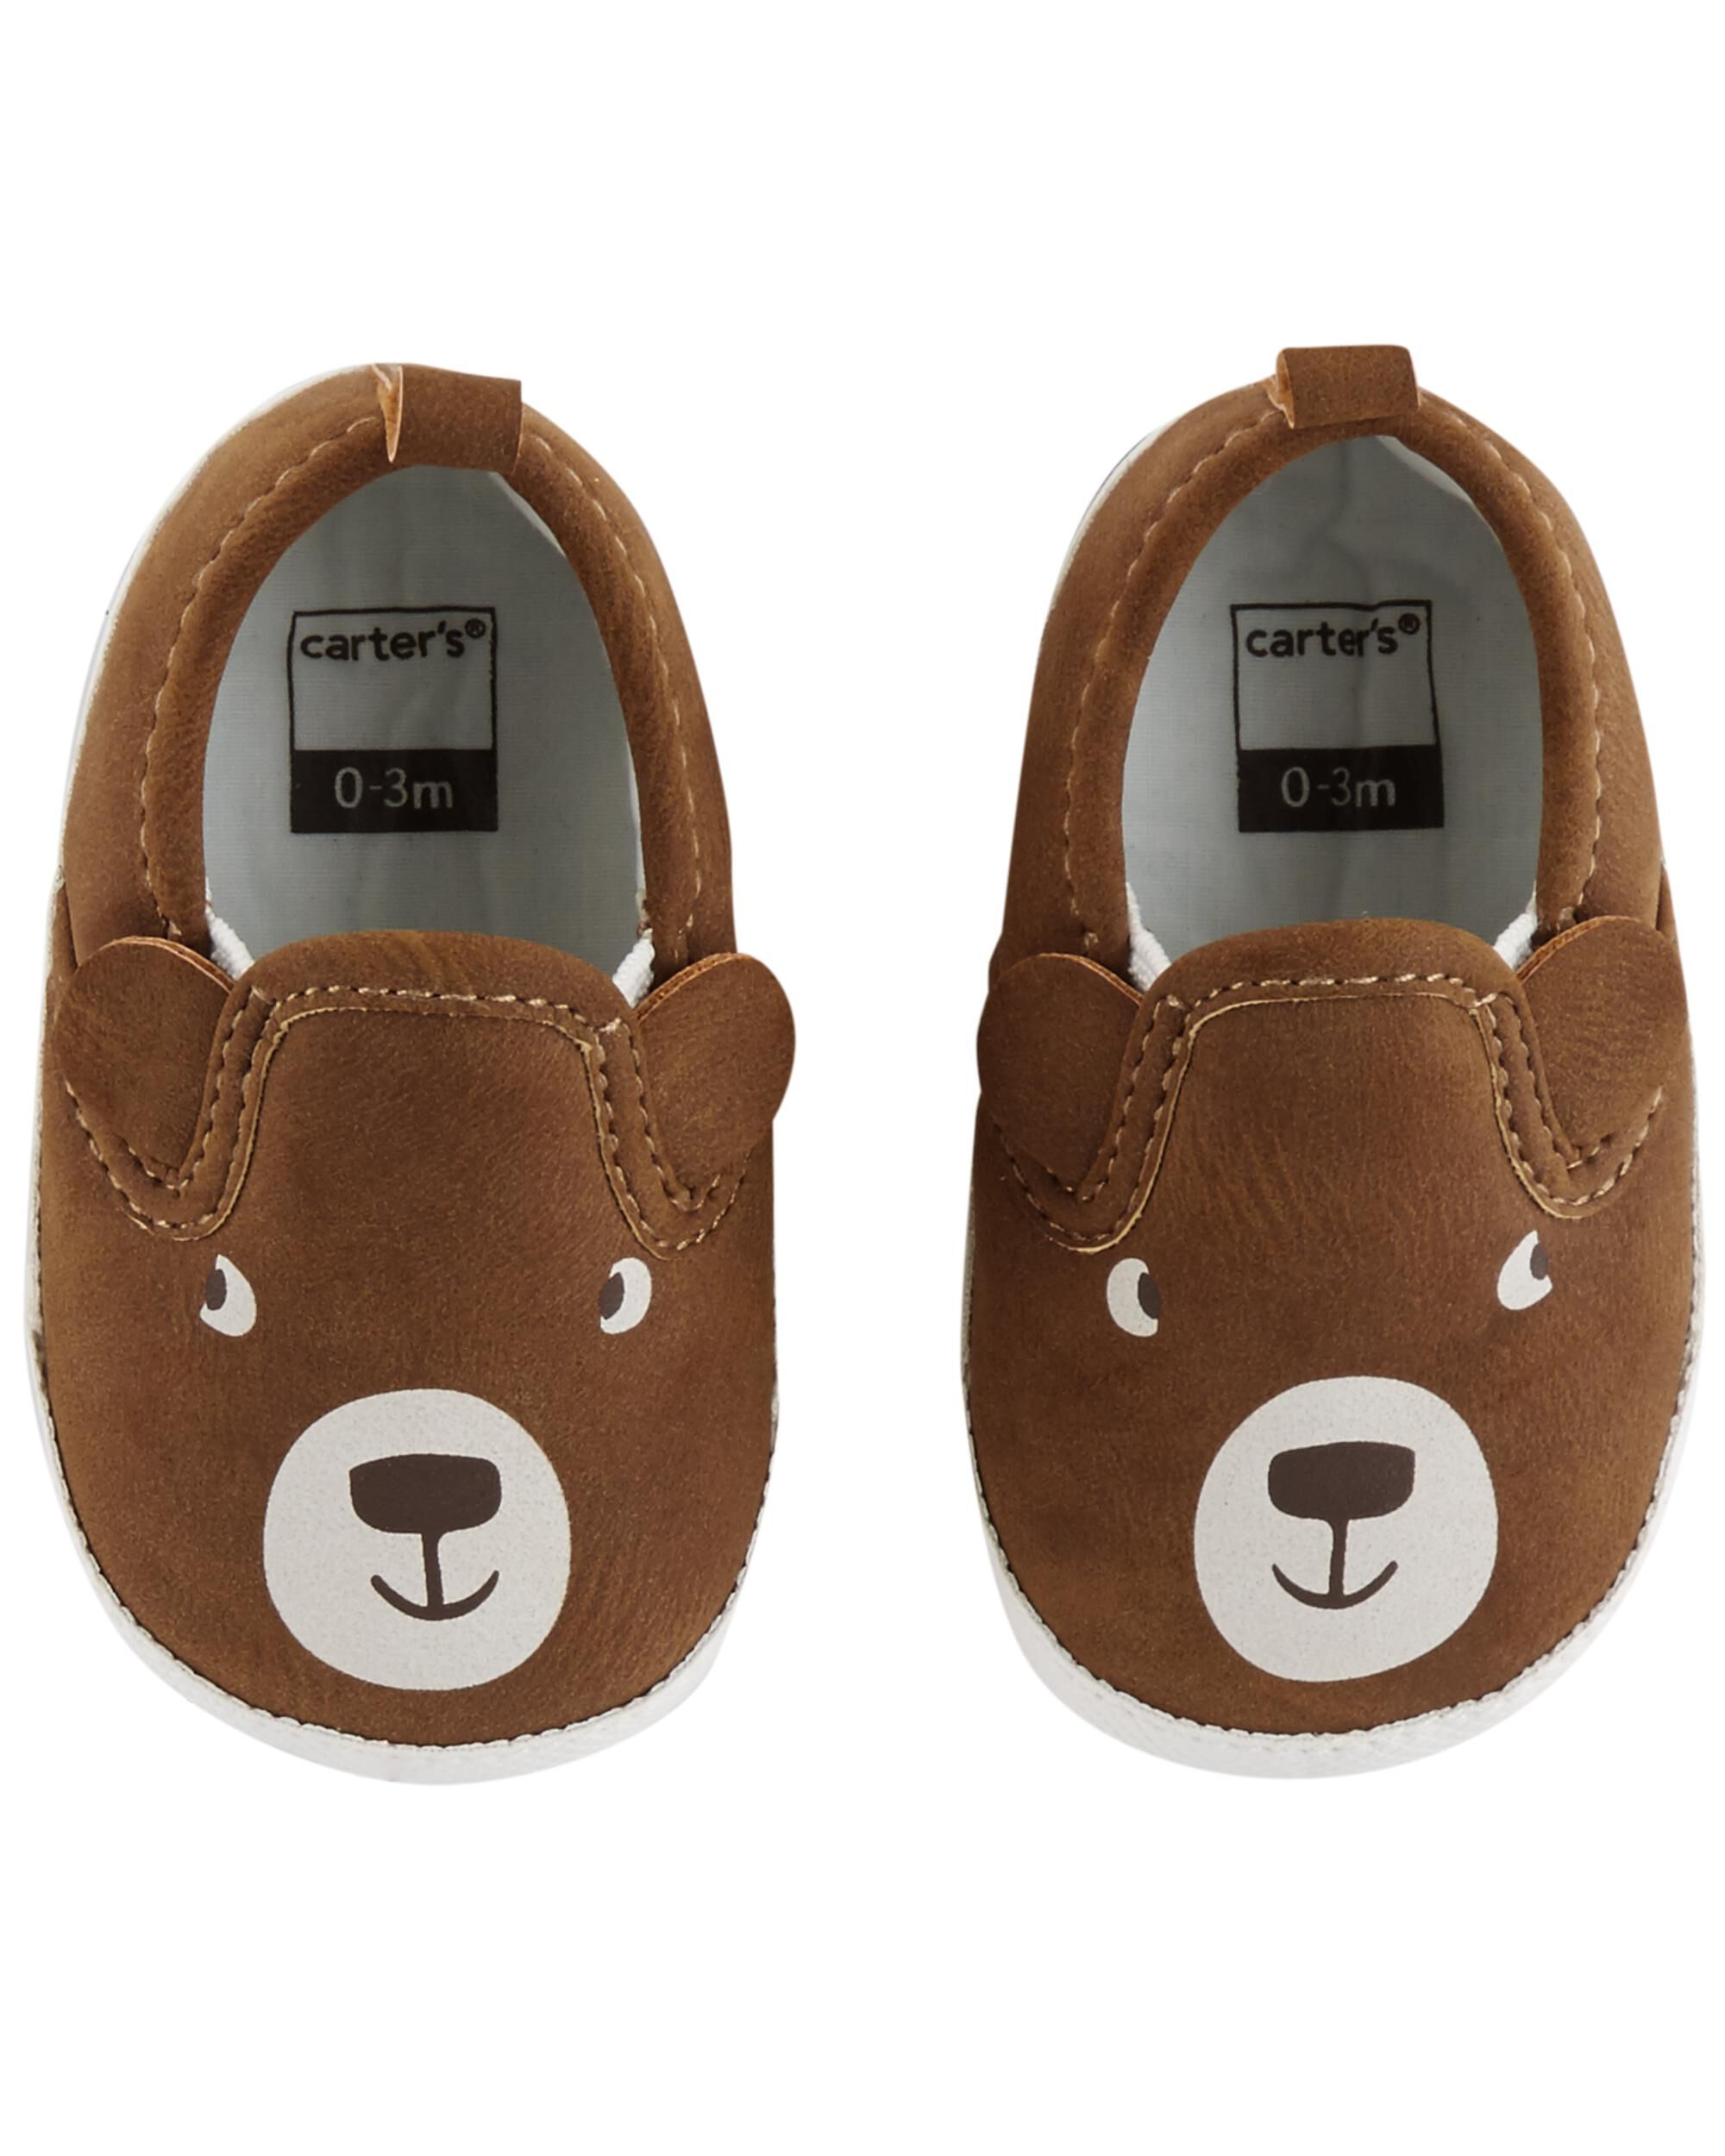 Bear Sneaker Baby Shoes | carters 